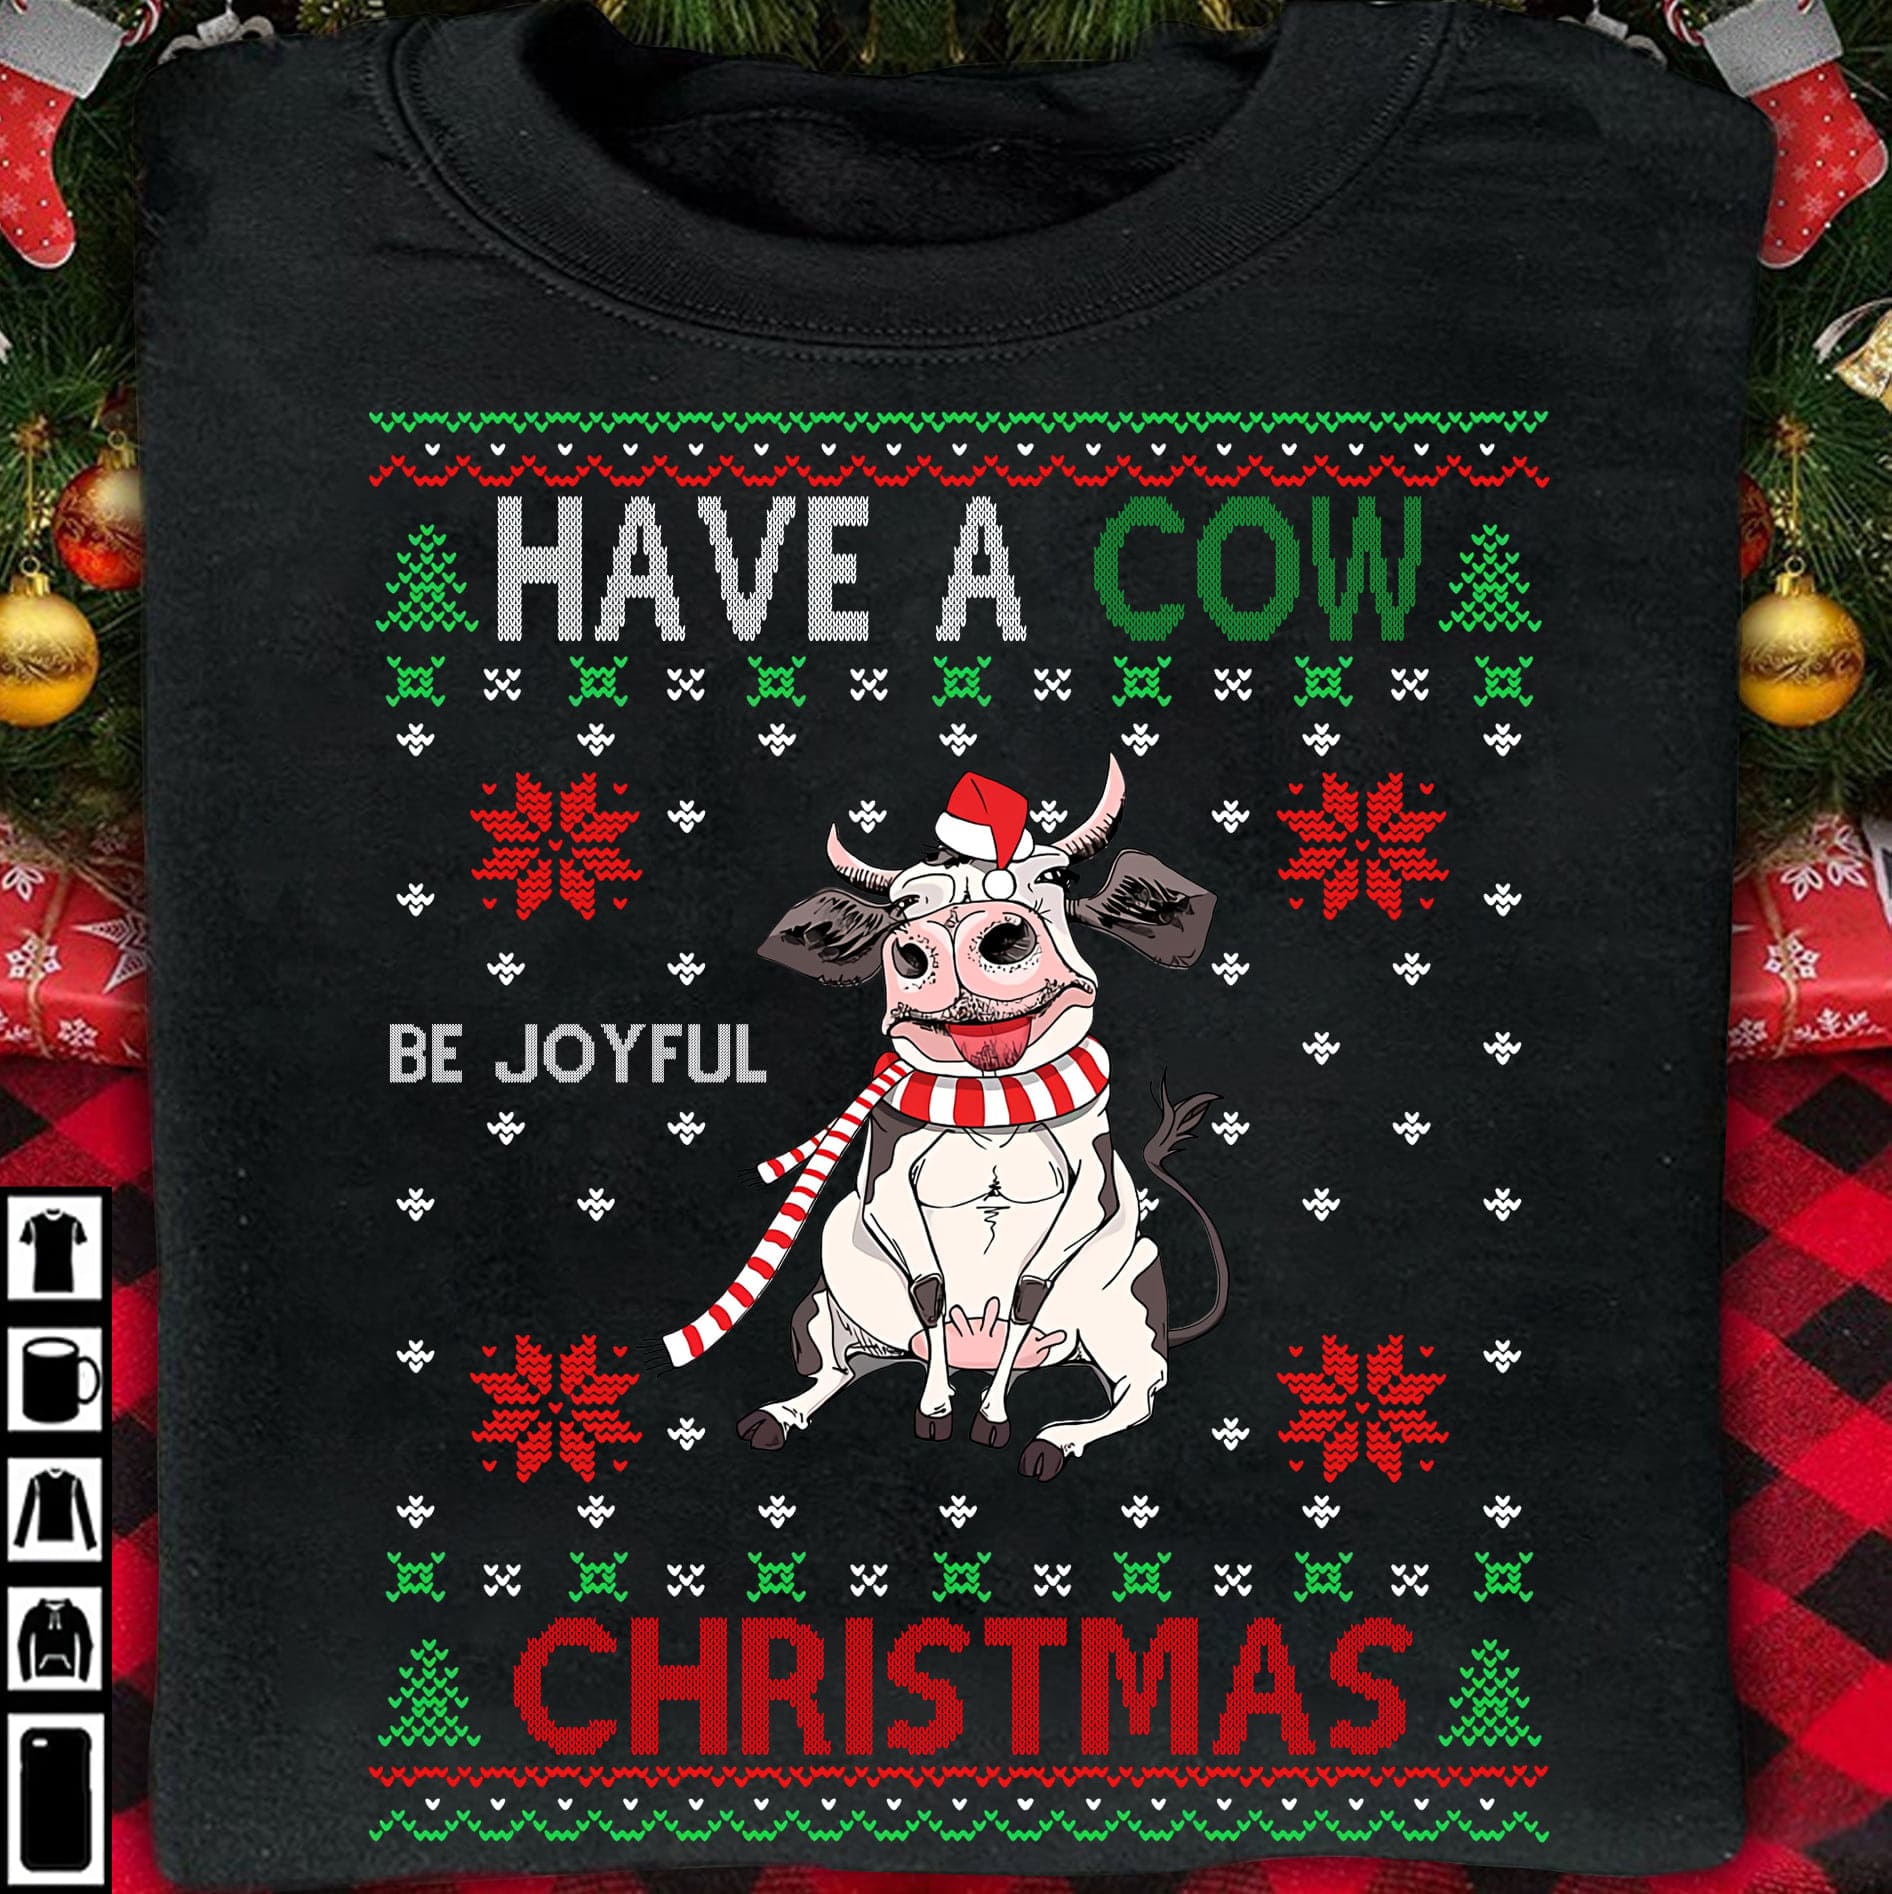 Funny Santa Cow Ugly Christmas Sweater - Have a cow be joyful christmas